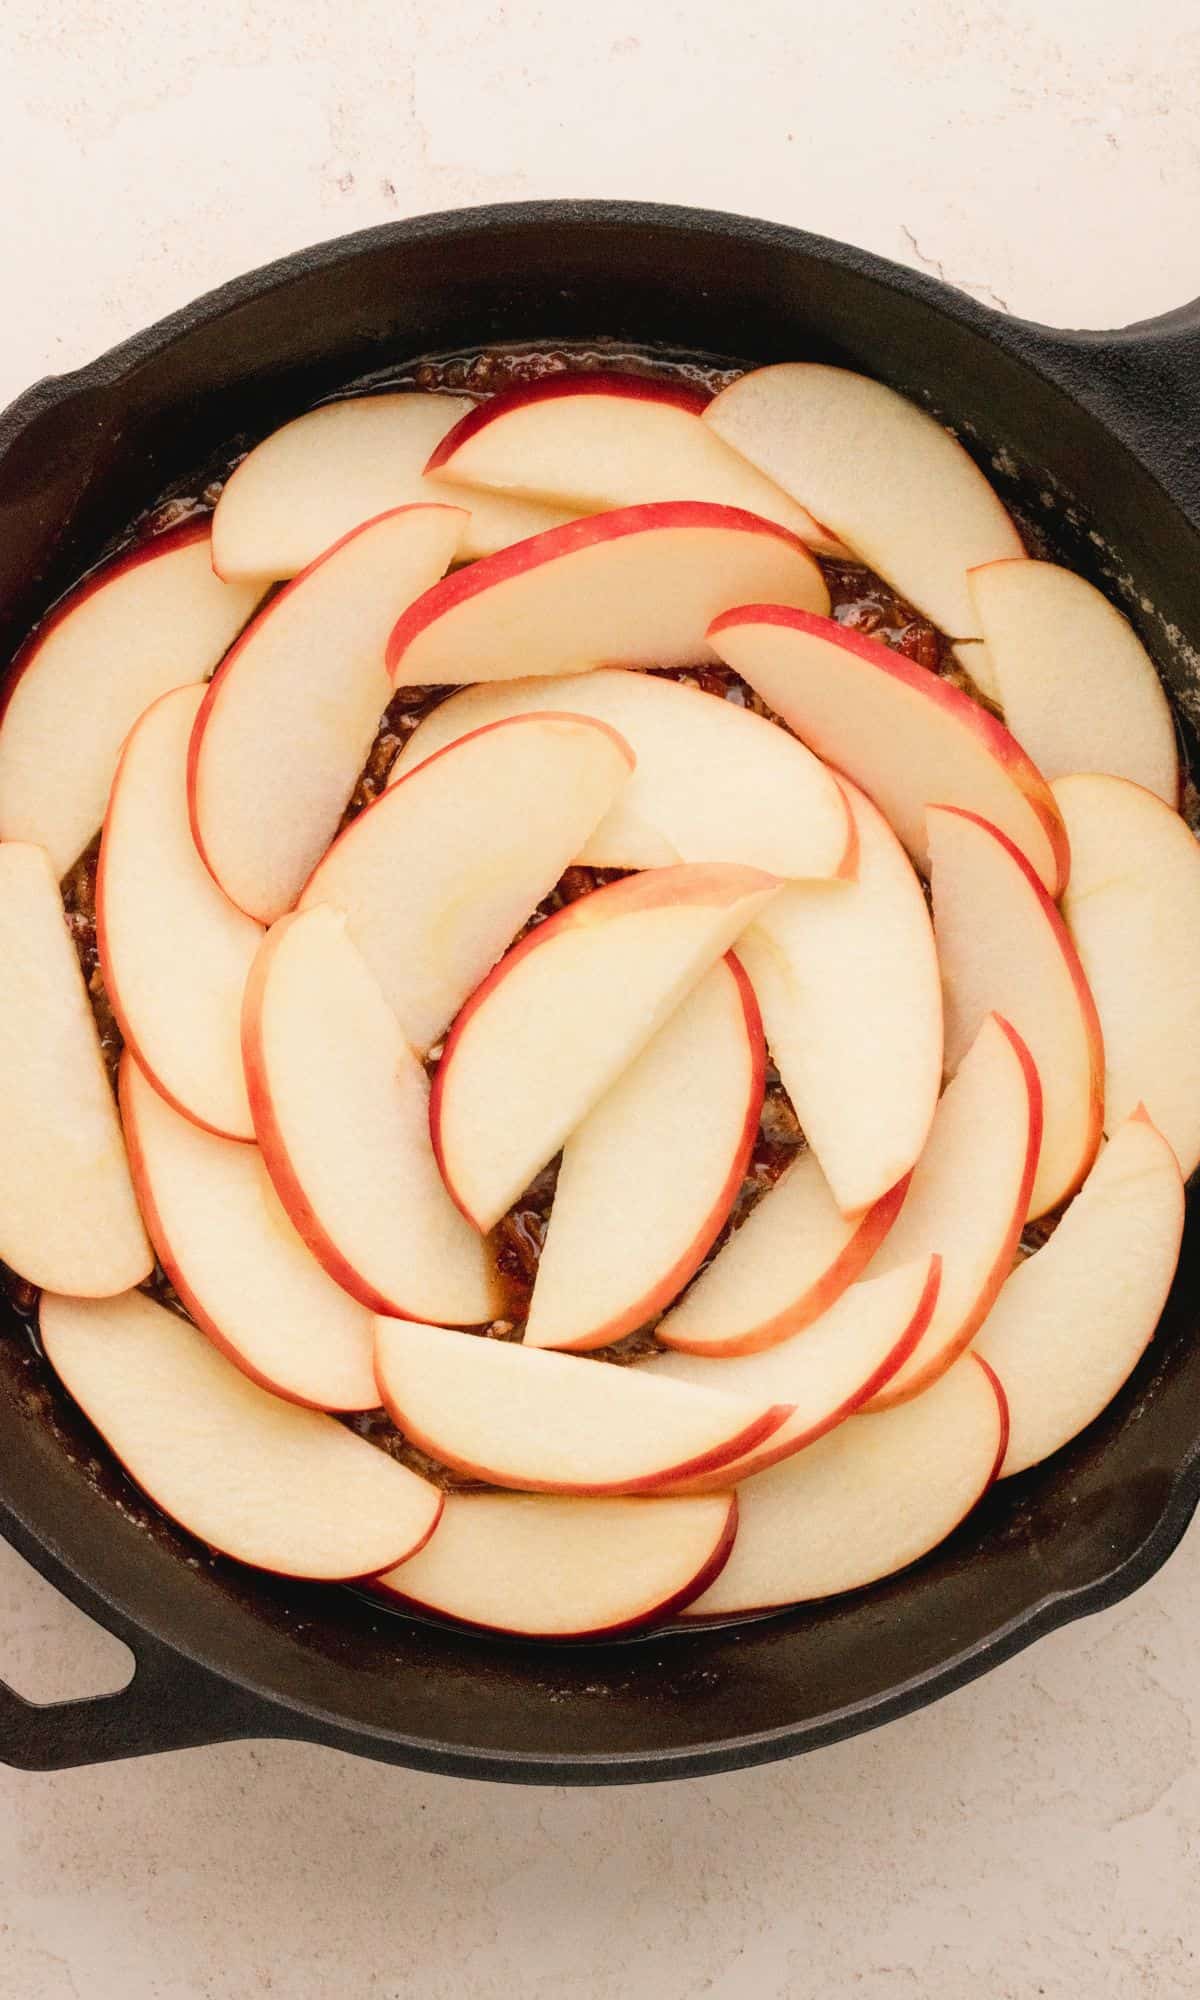 Caramel pecan apple spice upside down cake preparation.